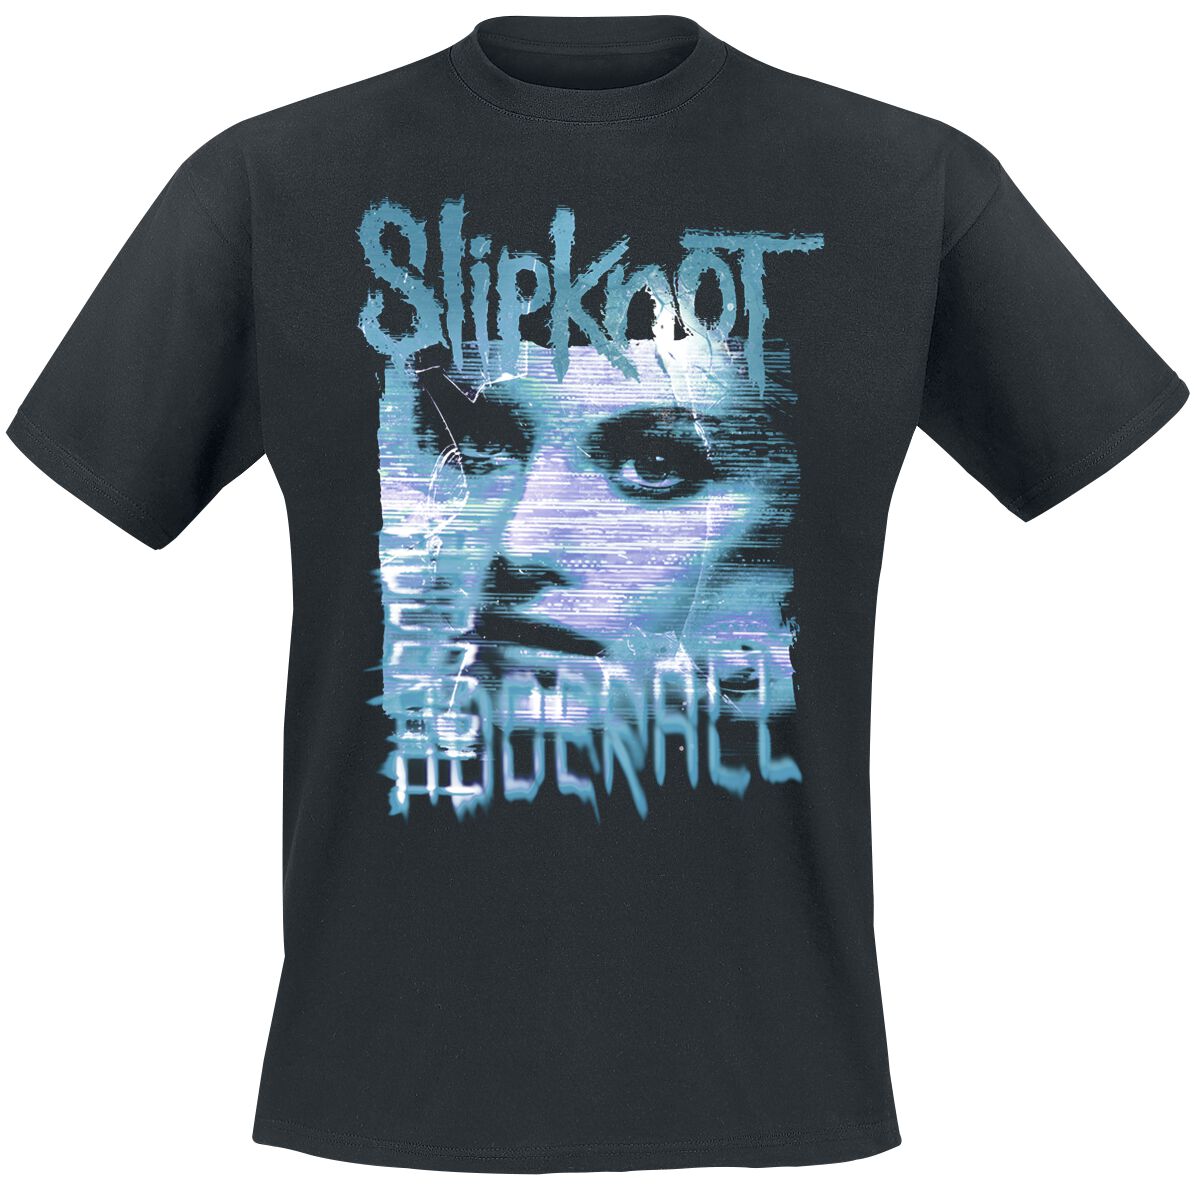 Slipknot Adderall Listener T-Shirt schwarz in M